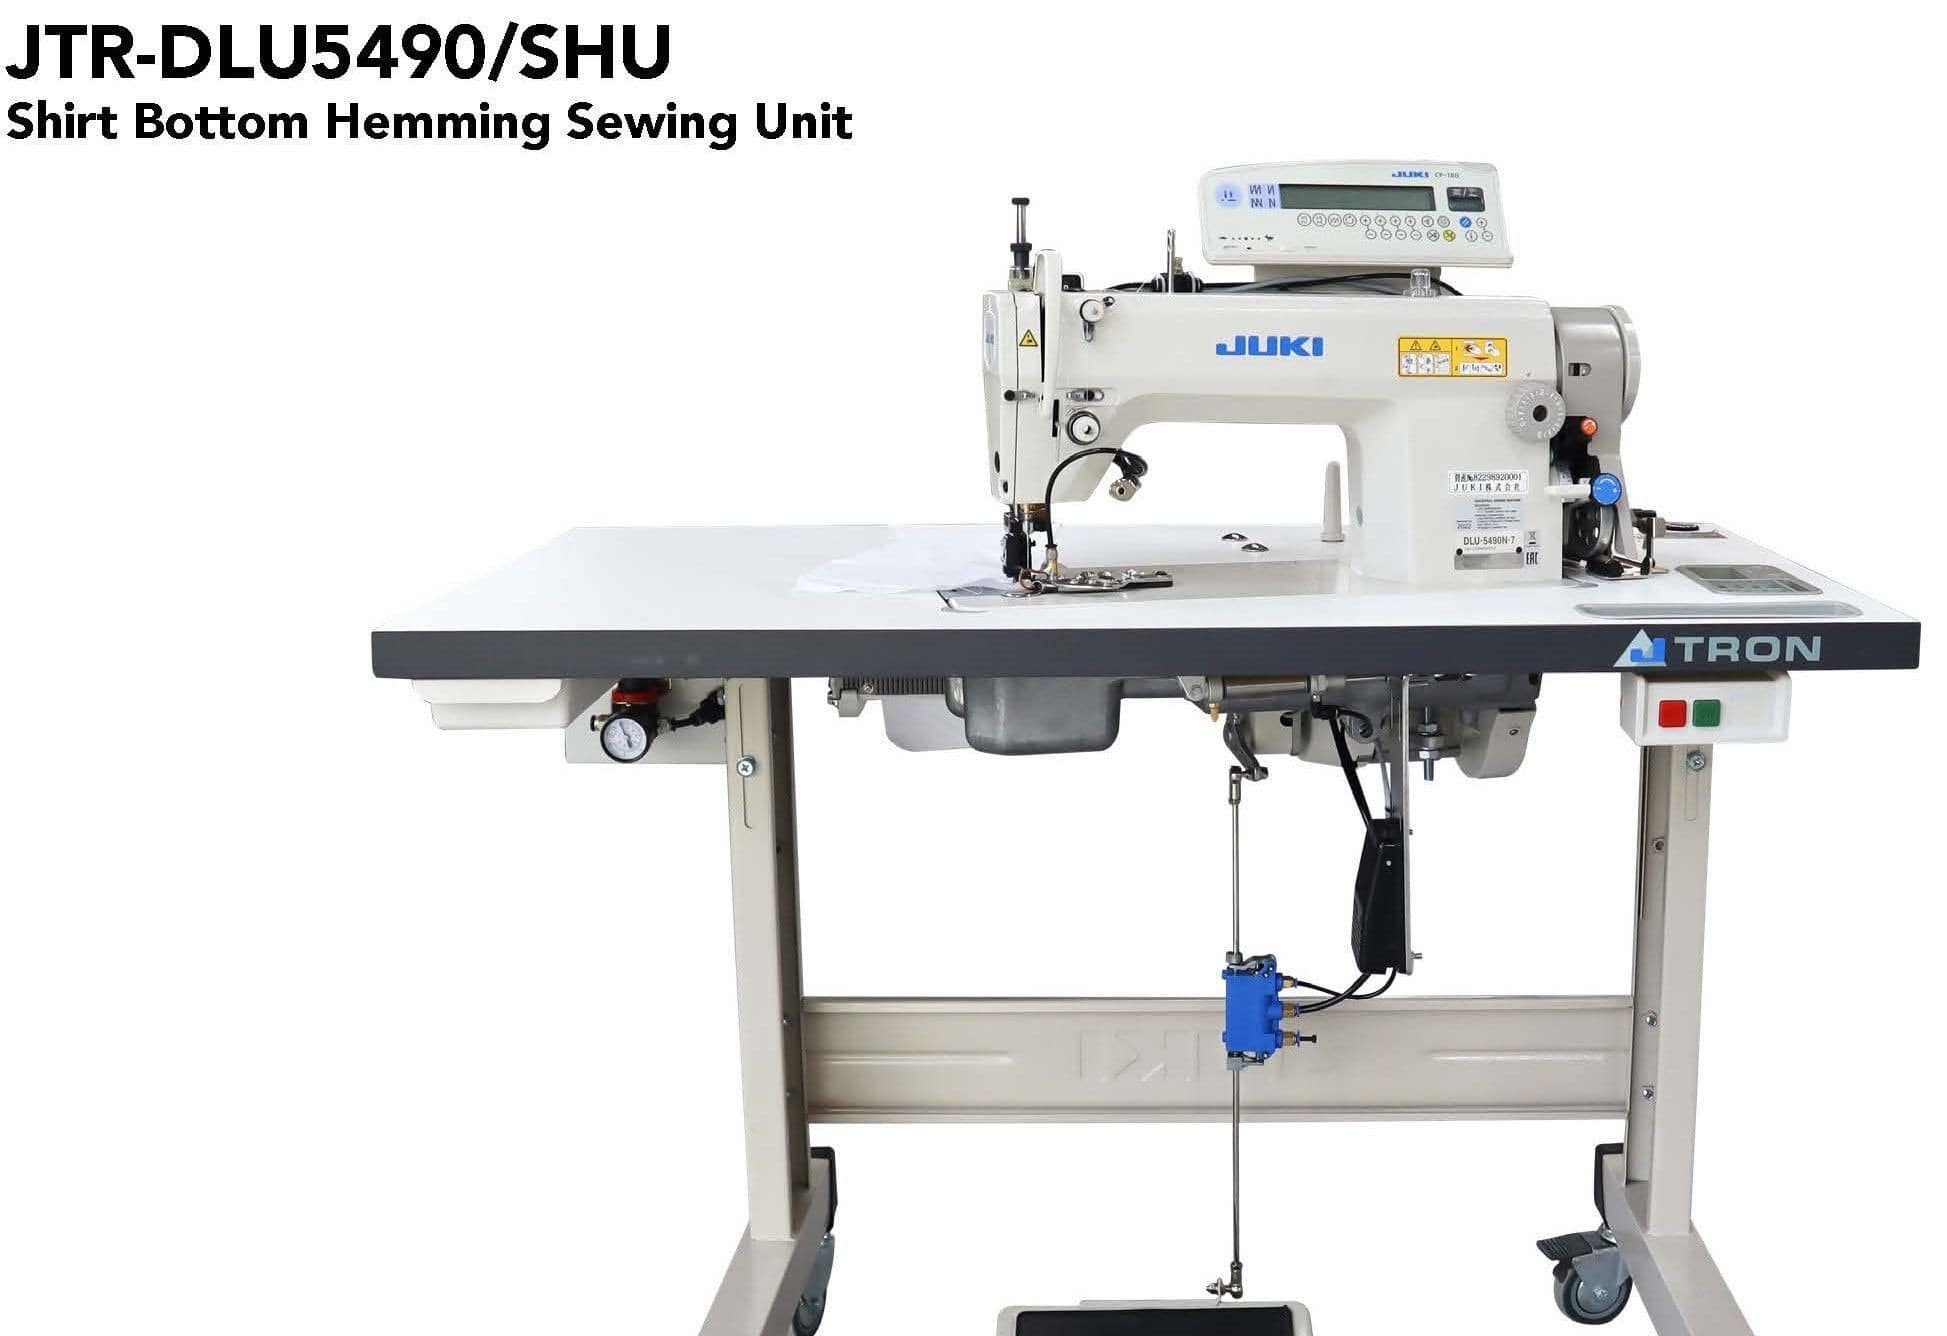 JTRON JTR-DLU5490/SHU
Shirt Bottom Hemming Sewing Unit